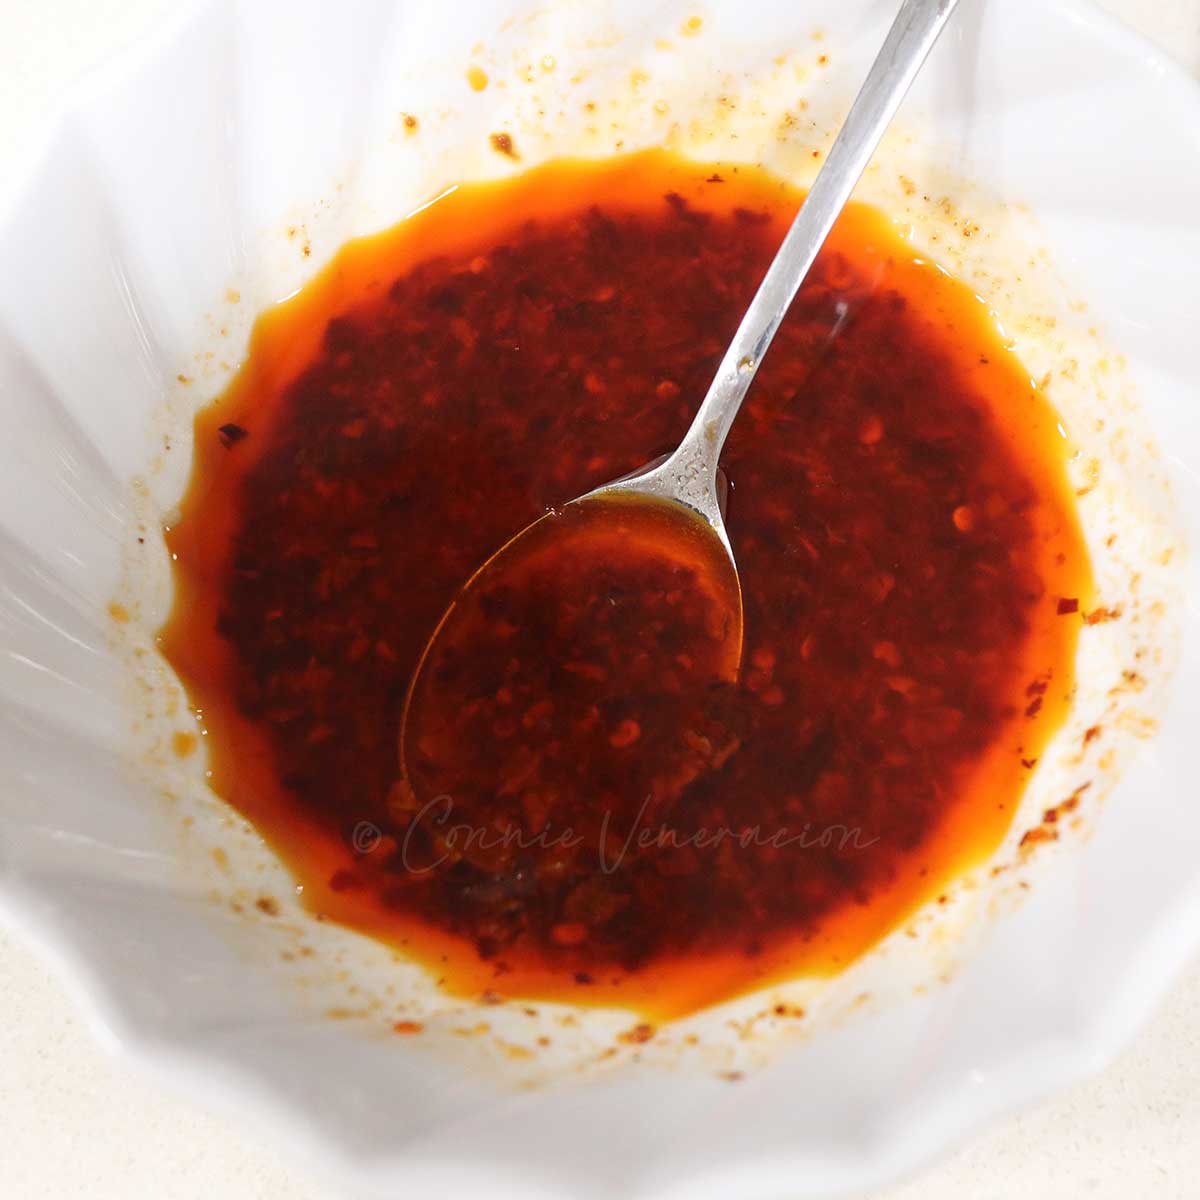 Homemade Sichuan chili oil sauce